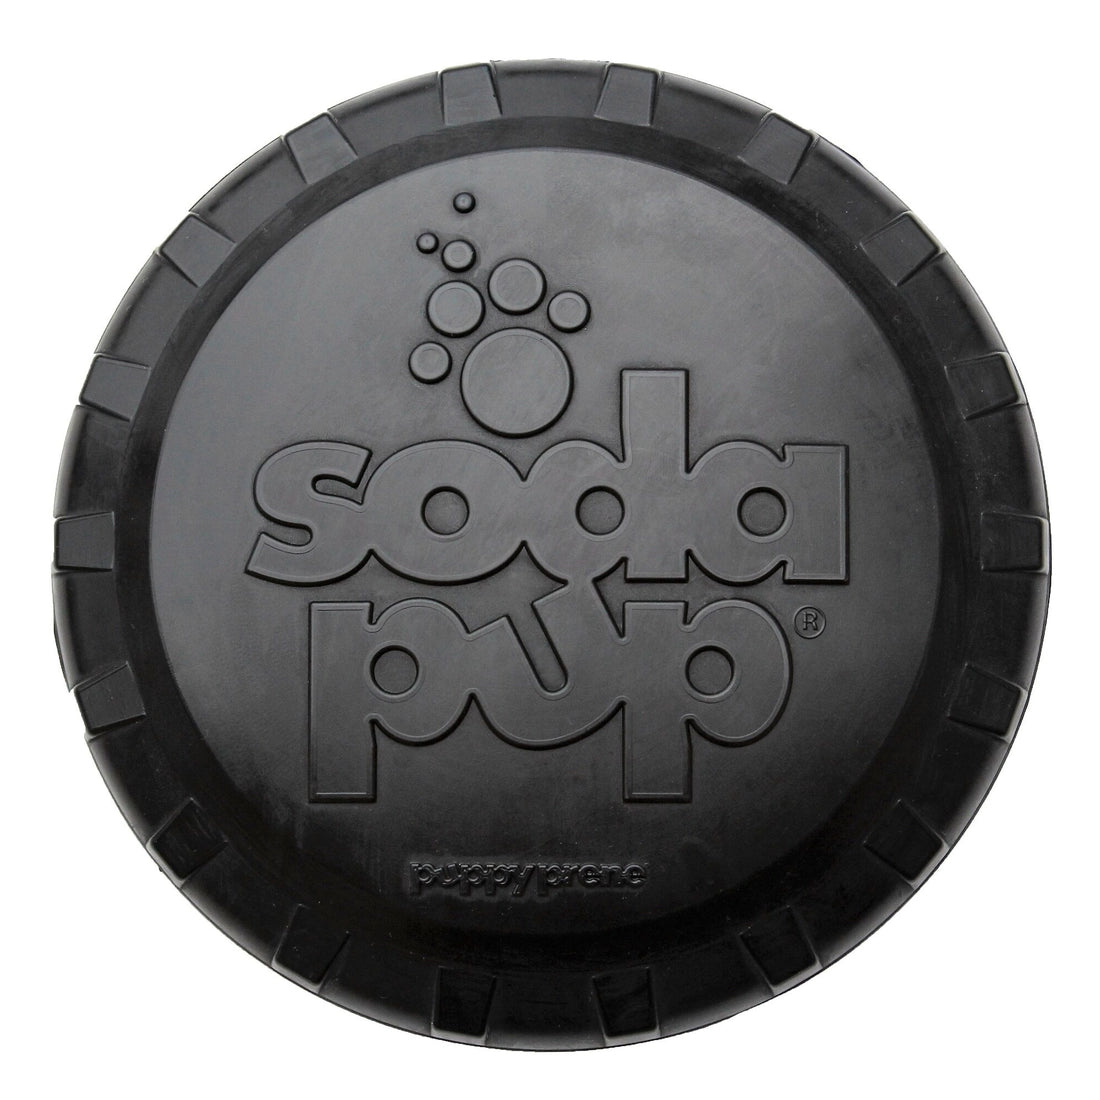 Black Soda Pup Rubber Frisbee - Extra Strength